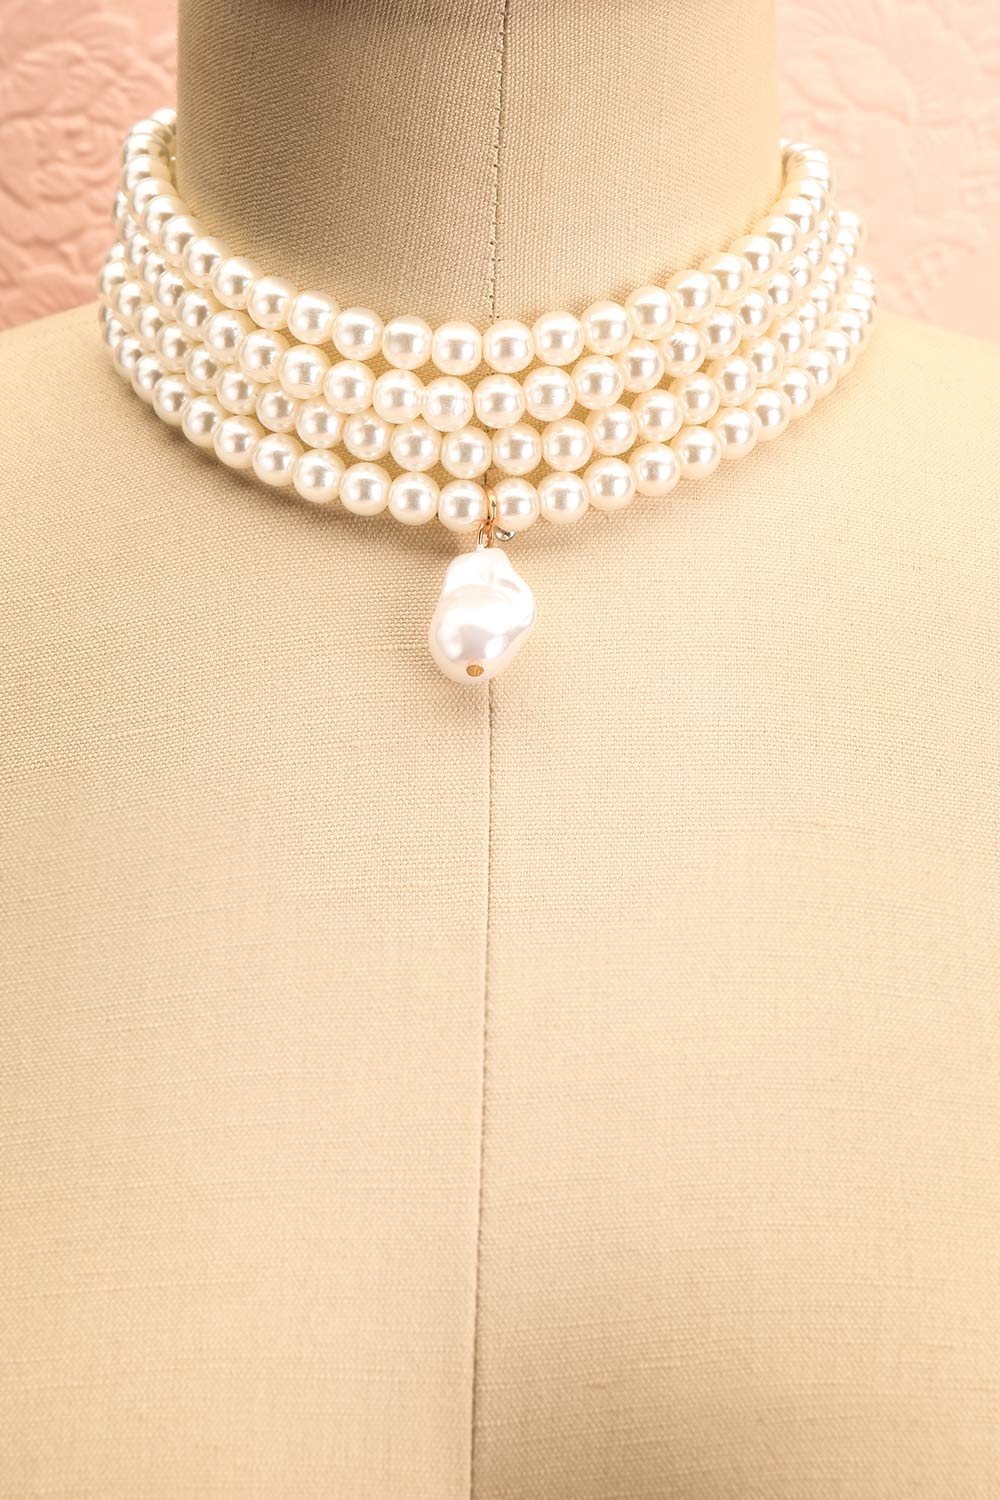 Aichryson Layered Pearls Choker w/ Pearl Pendant | Boutique 1861